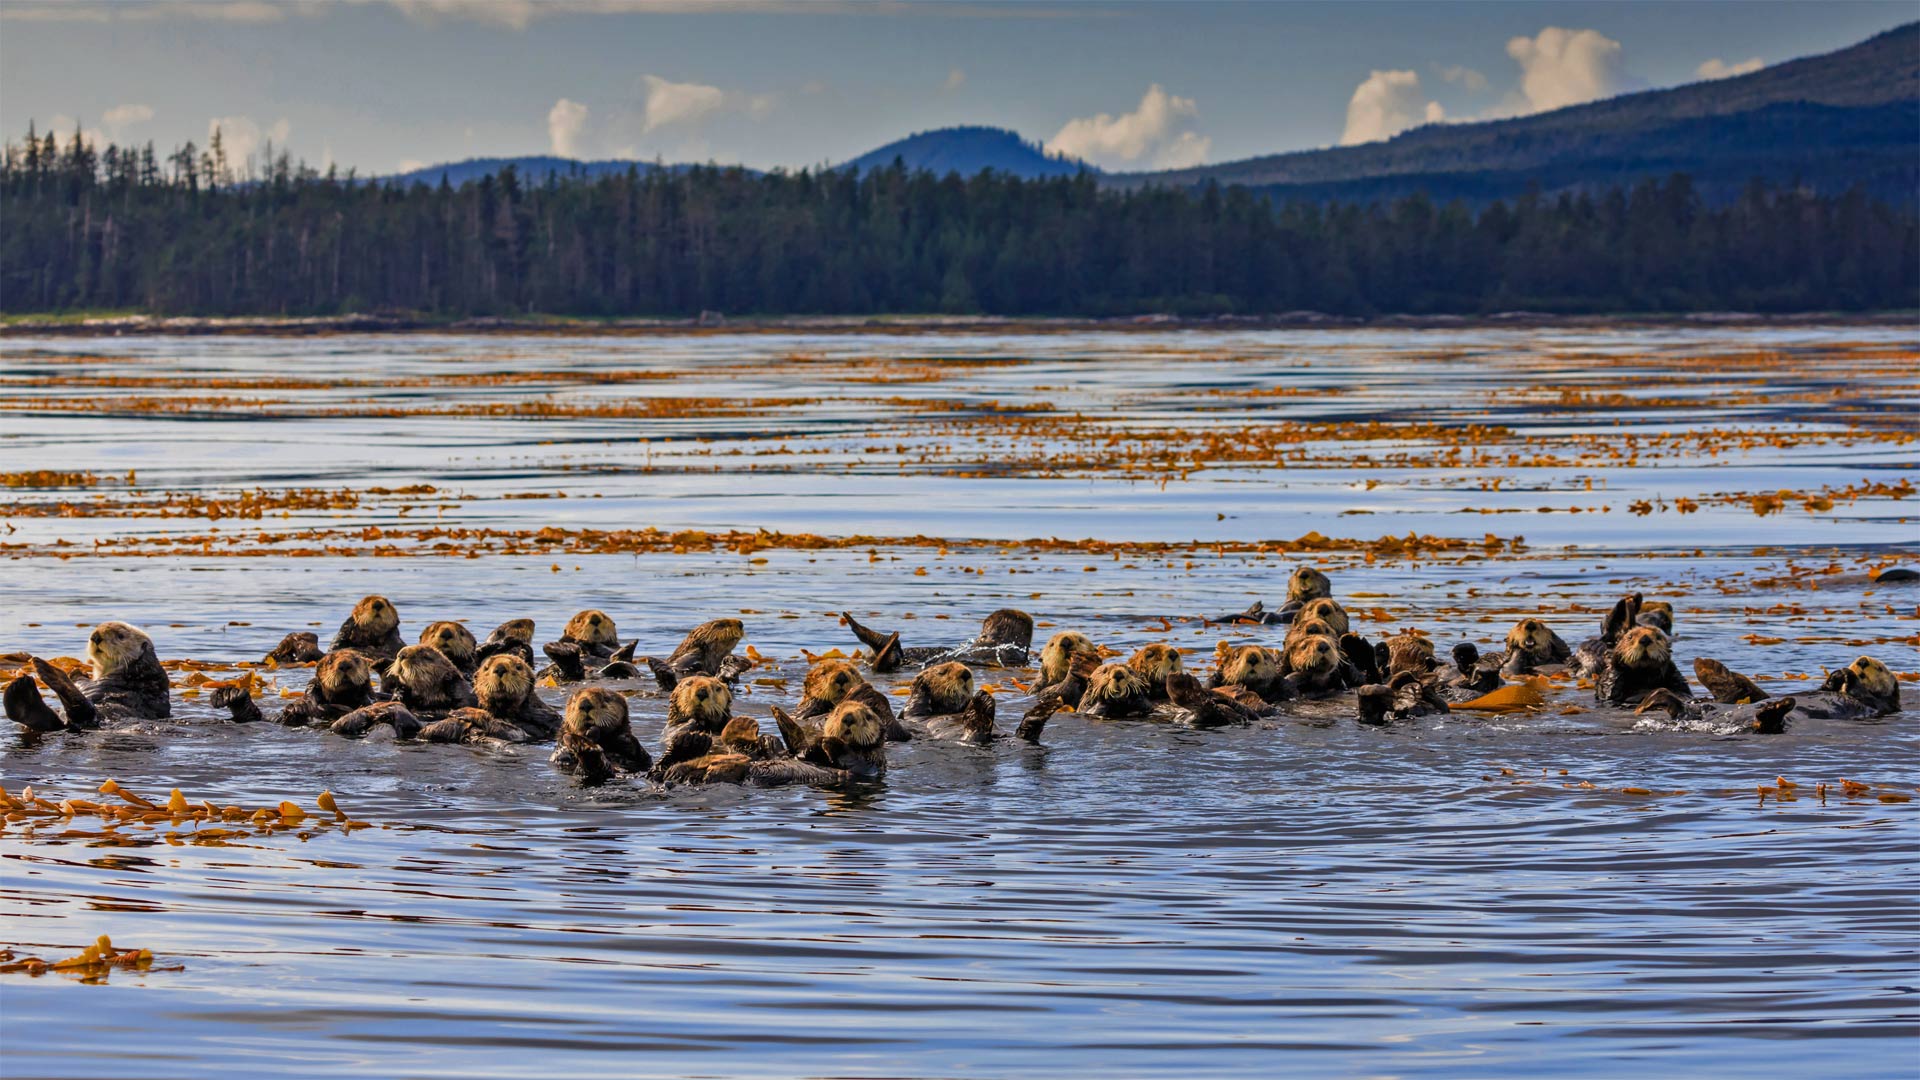 Raft of sea otters in Sitka Sound, near Sitka, Alaska - Robert Harding/Offset/Shutterstock)